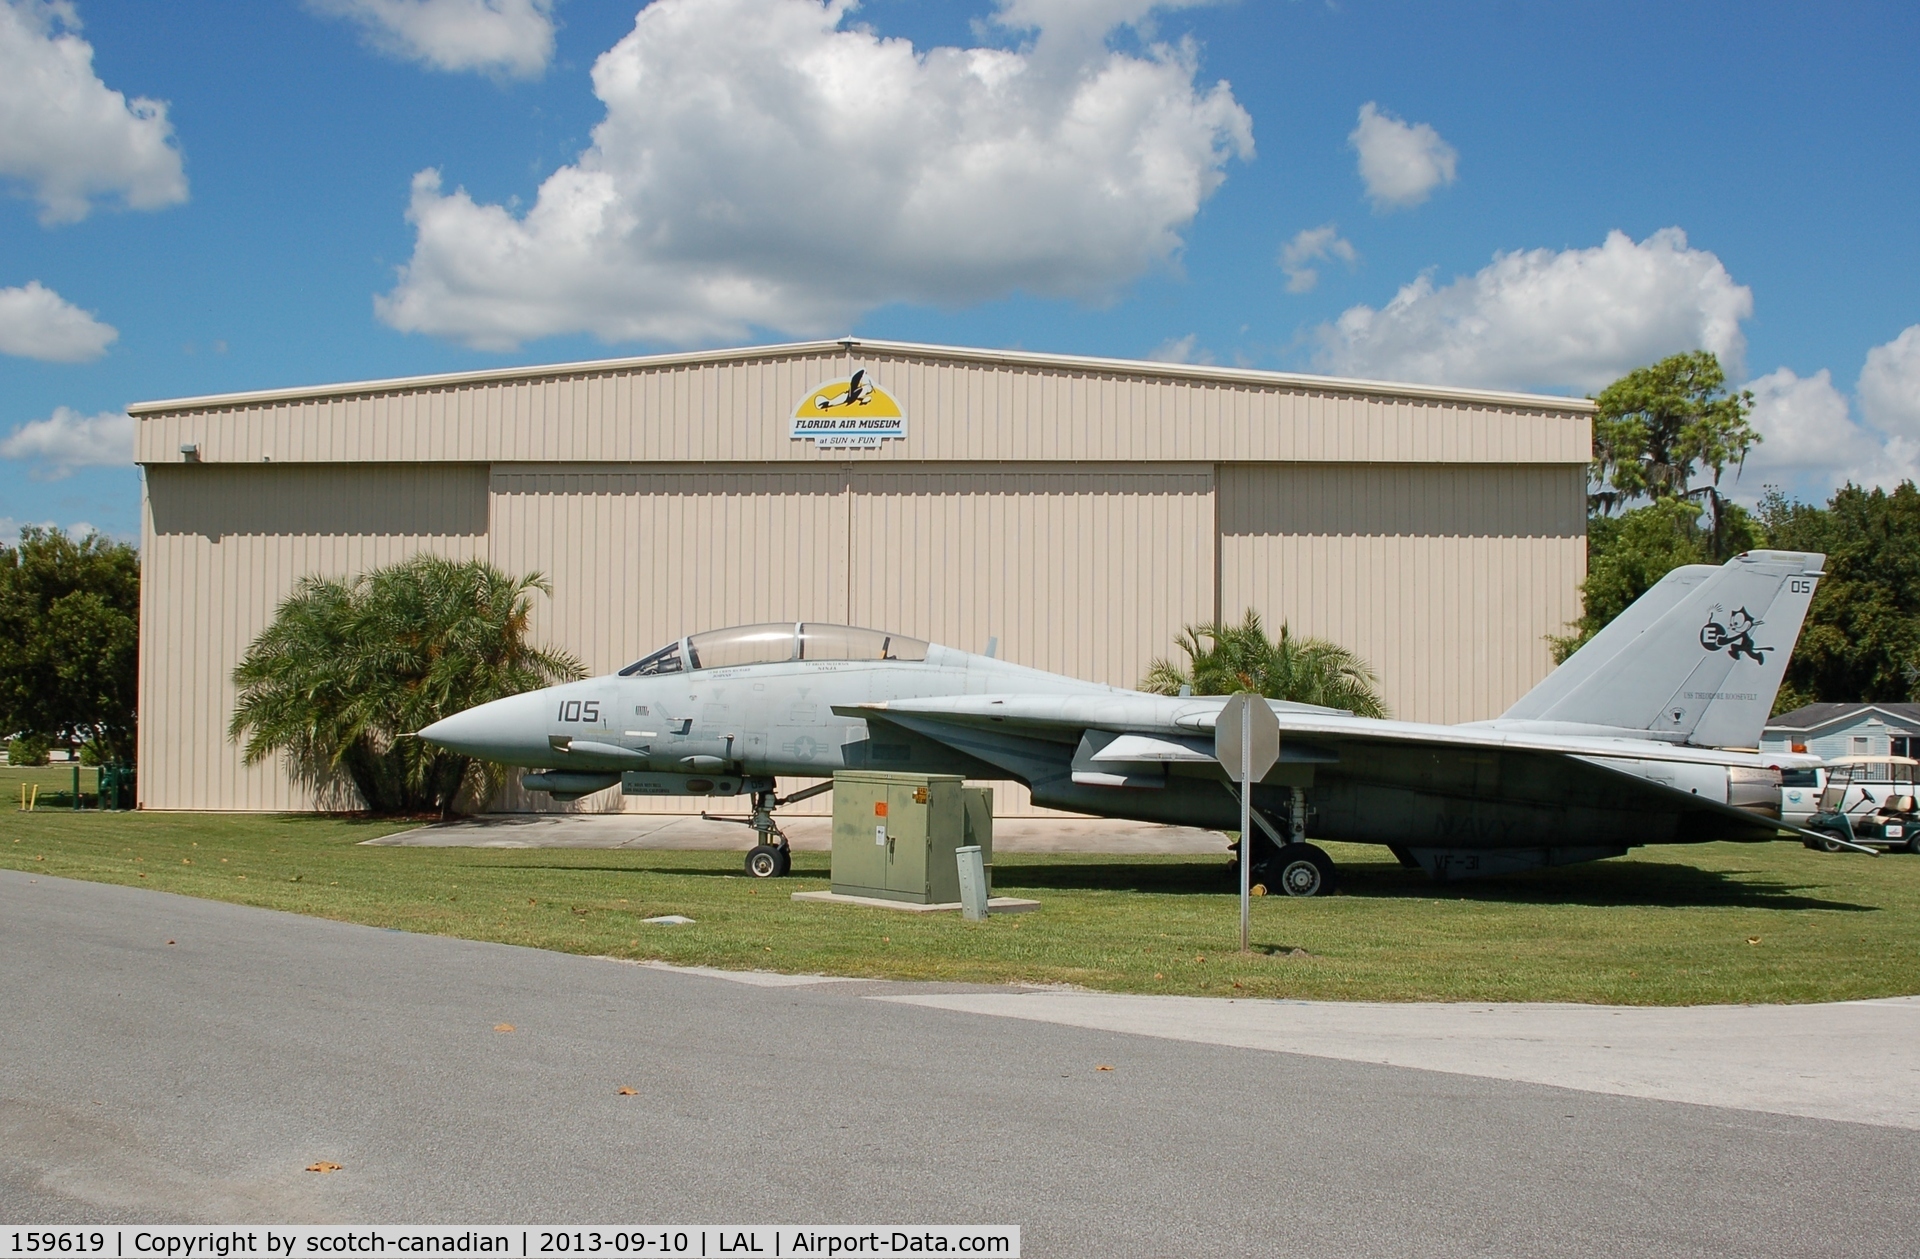 159619, Grumman F-14A Tomcat C/N 166, Grumman F-14A Tomcat, 159619, at the Florida Air Museum, Lakeland Linder Regional Airport, Lakeland, FL